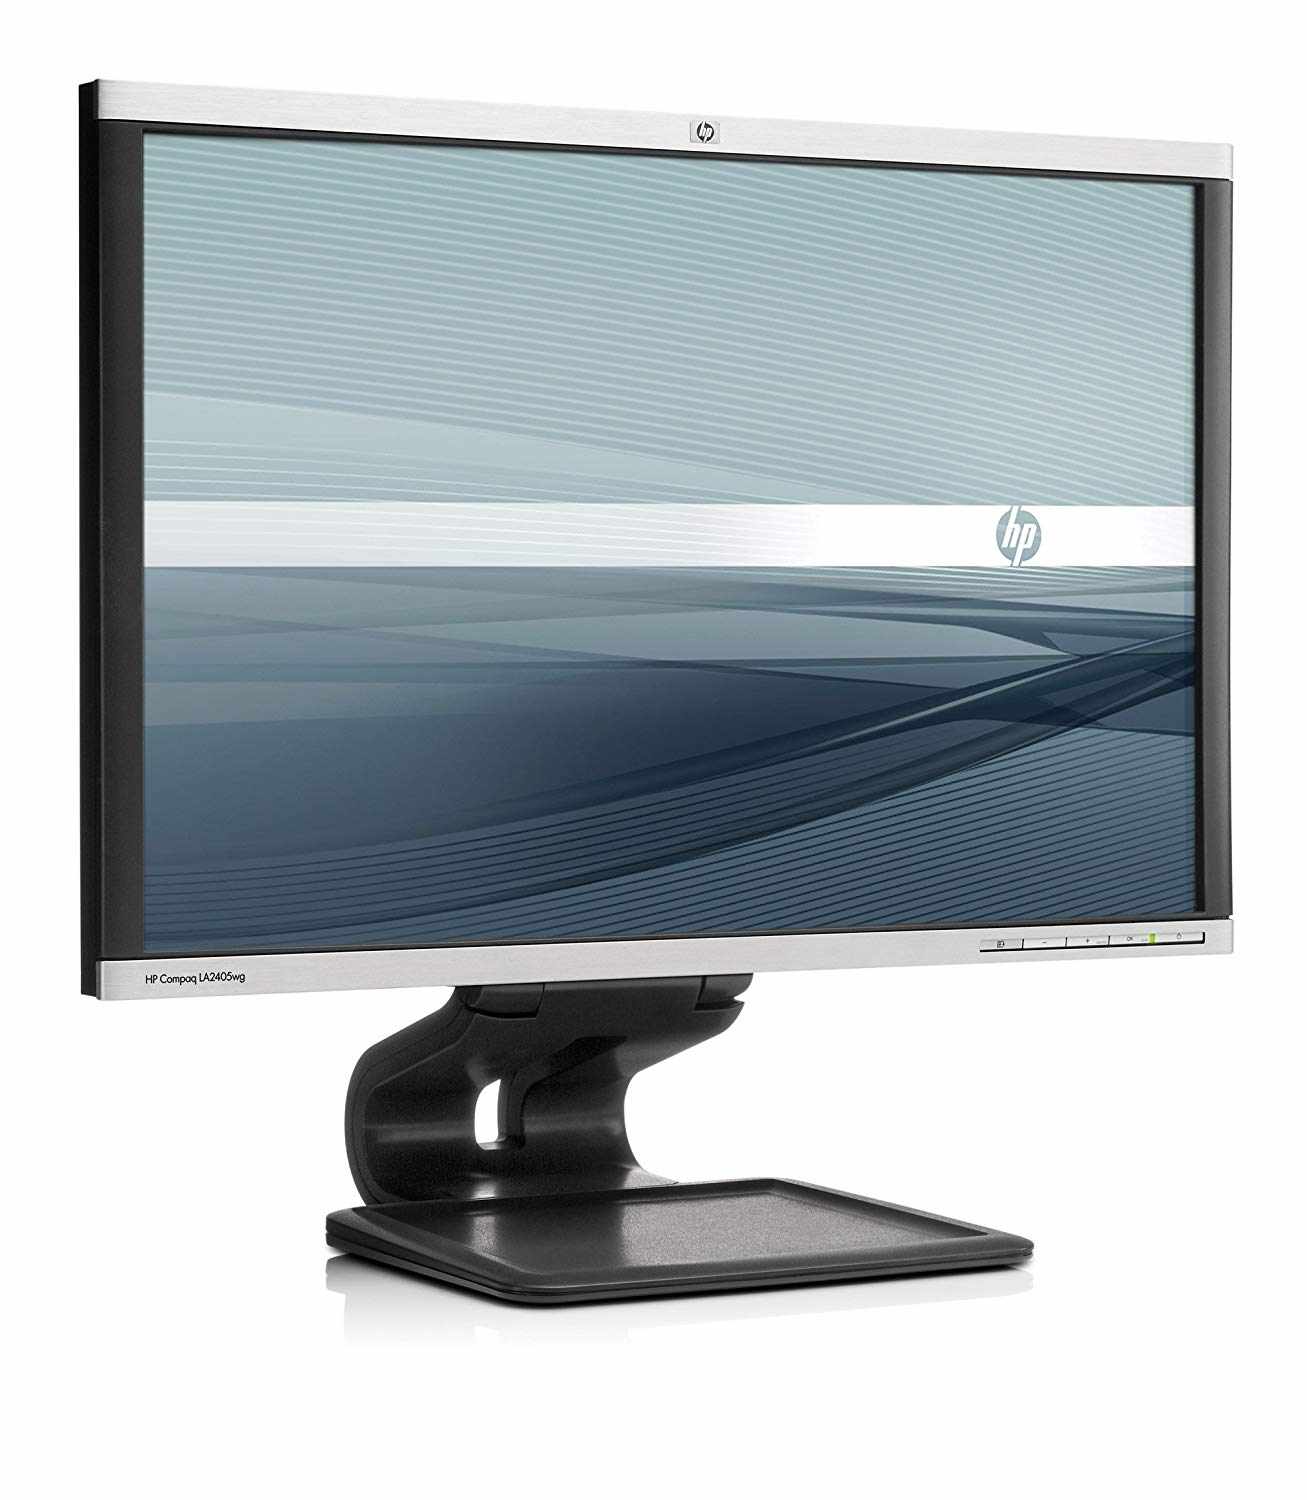 Monitor Refurbished HP LA2405WG, 24 Inch LCD, 1920 x 1200, VGA, DVI, Display Port, USB